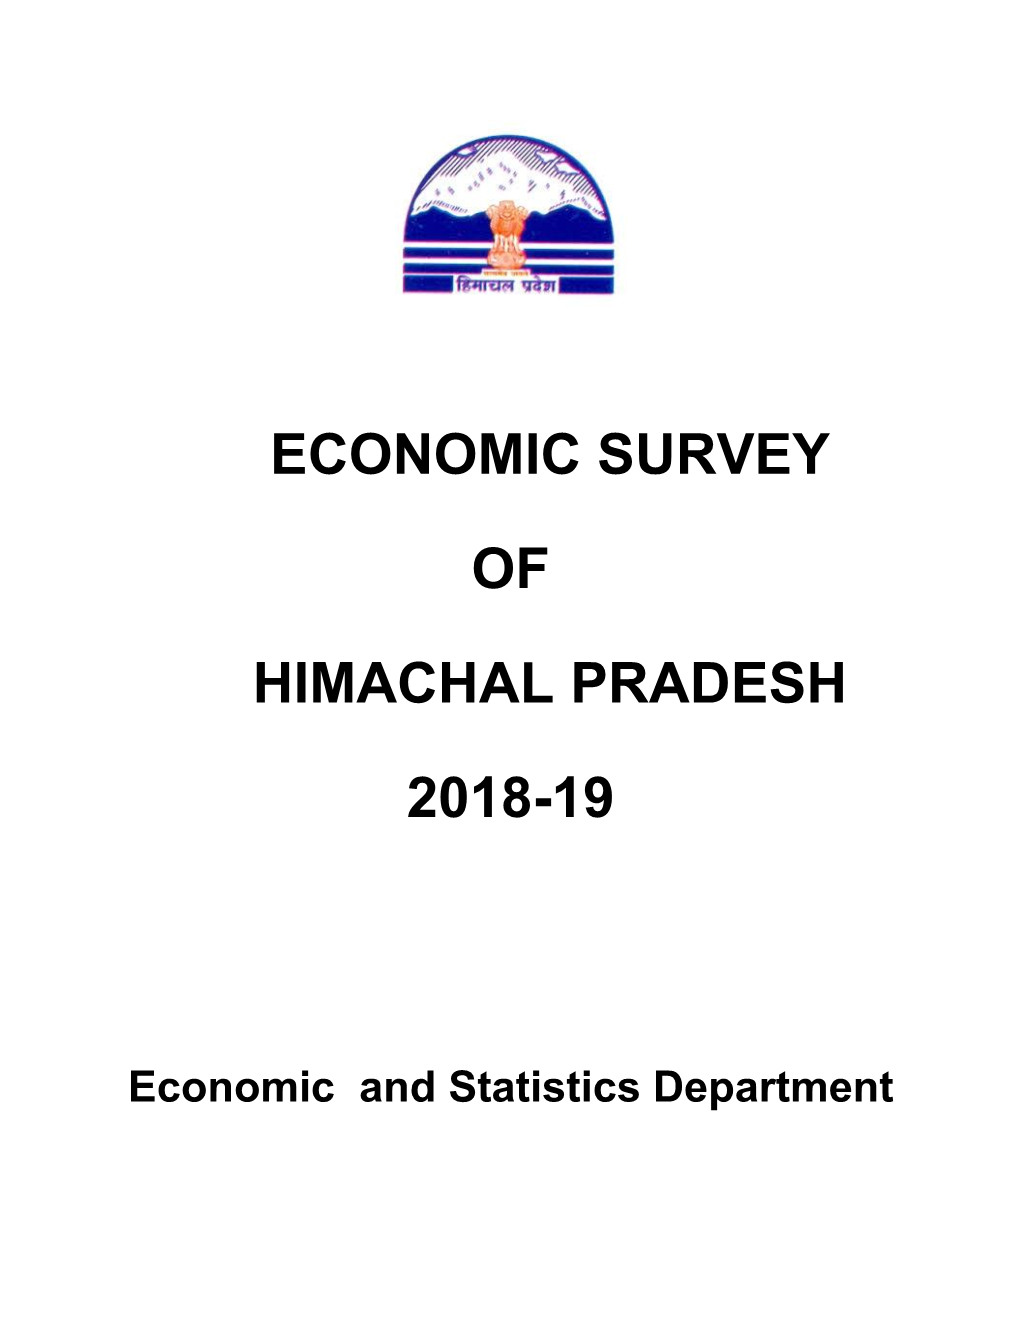 Economic Survey of Himachal Pradesh 2018-19